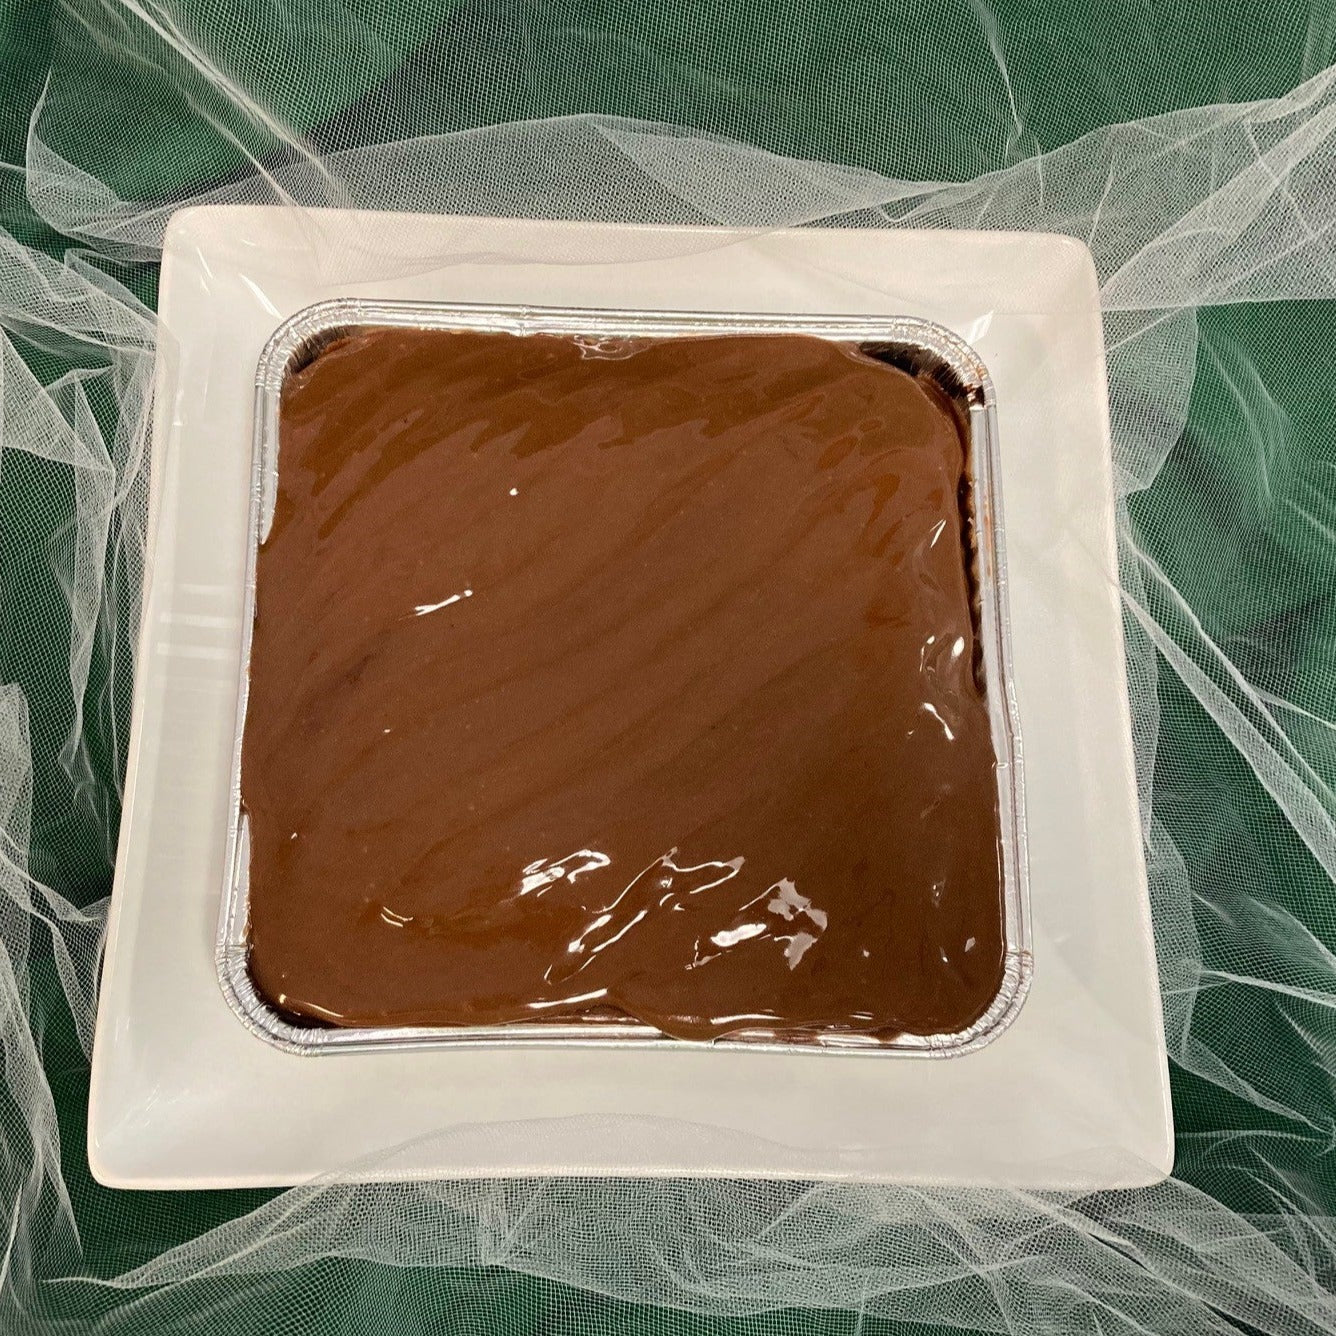 Vegan Chocolate Cake 8 x 8